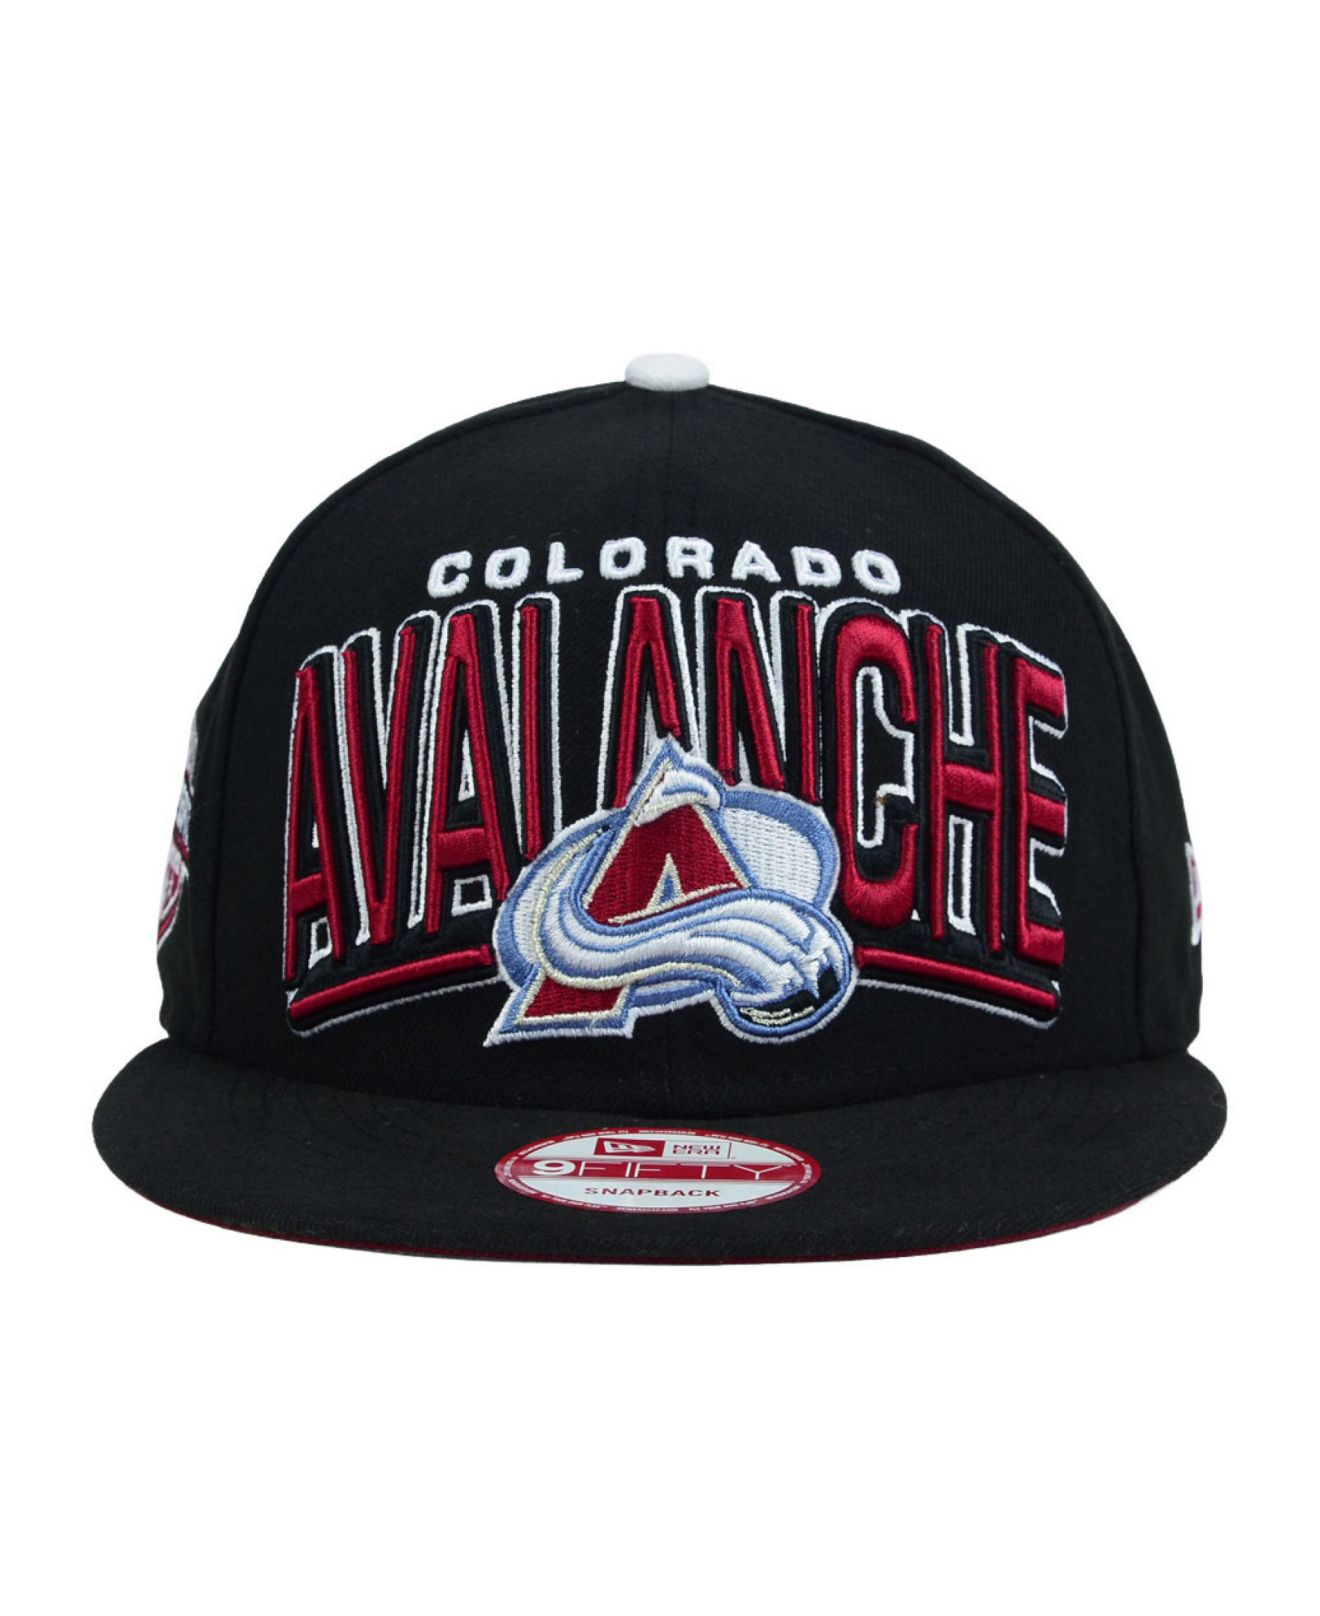 C'mon, everyone needs a new hat. - Colorado Avalanche